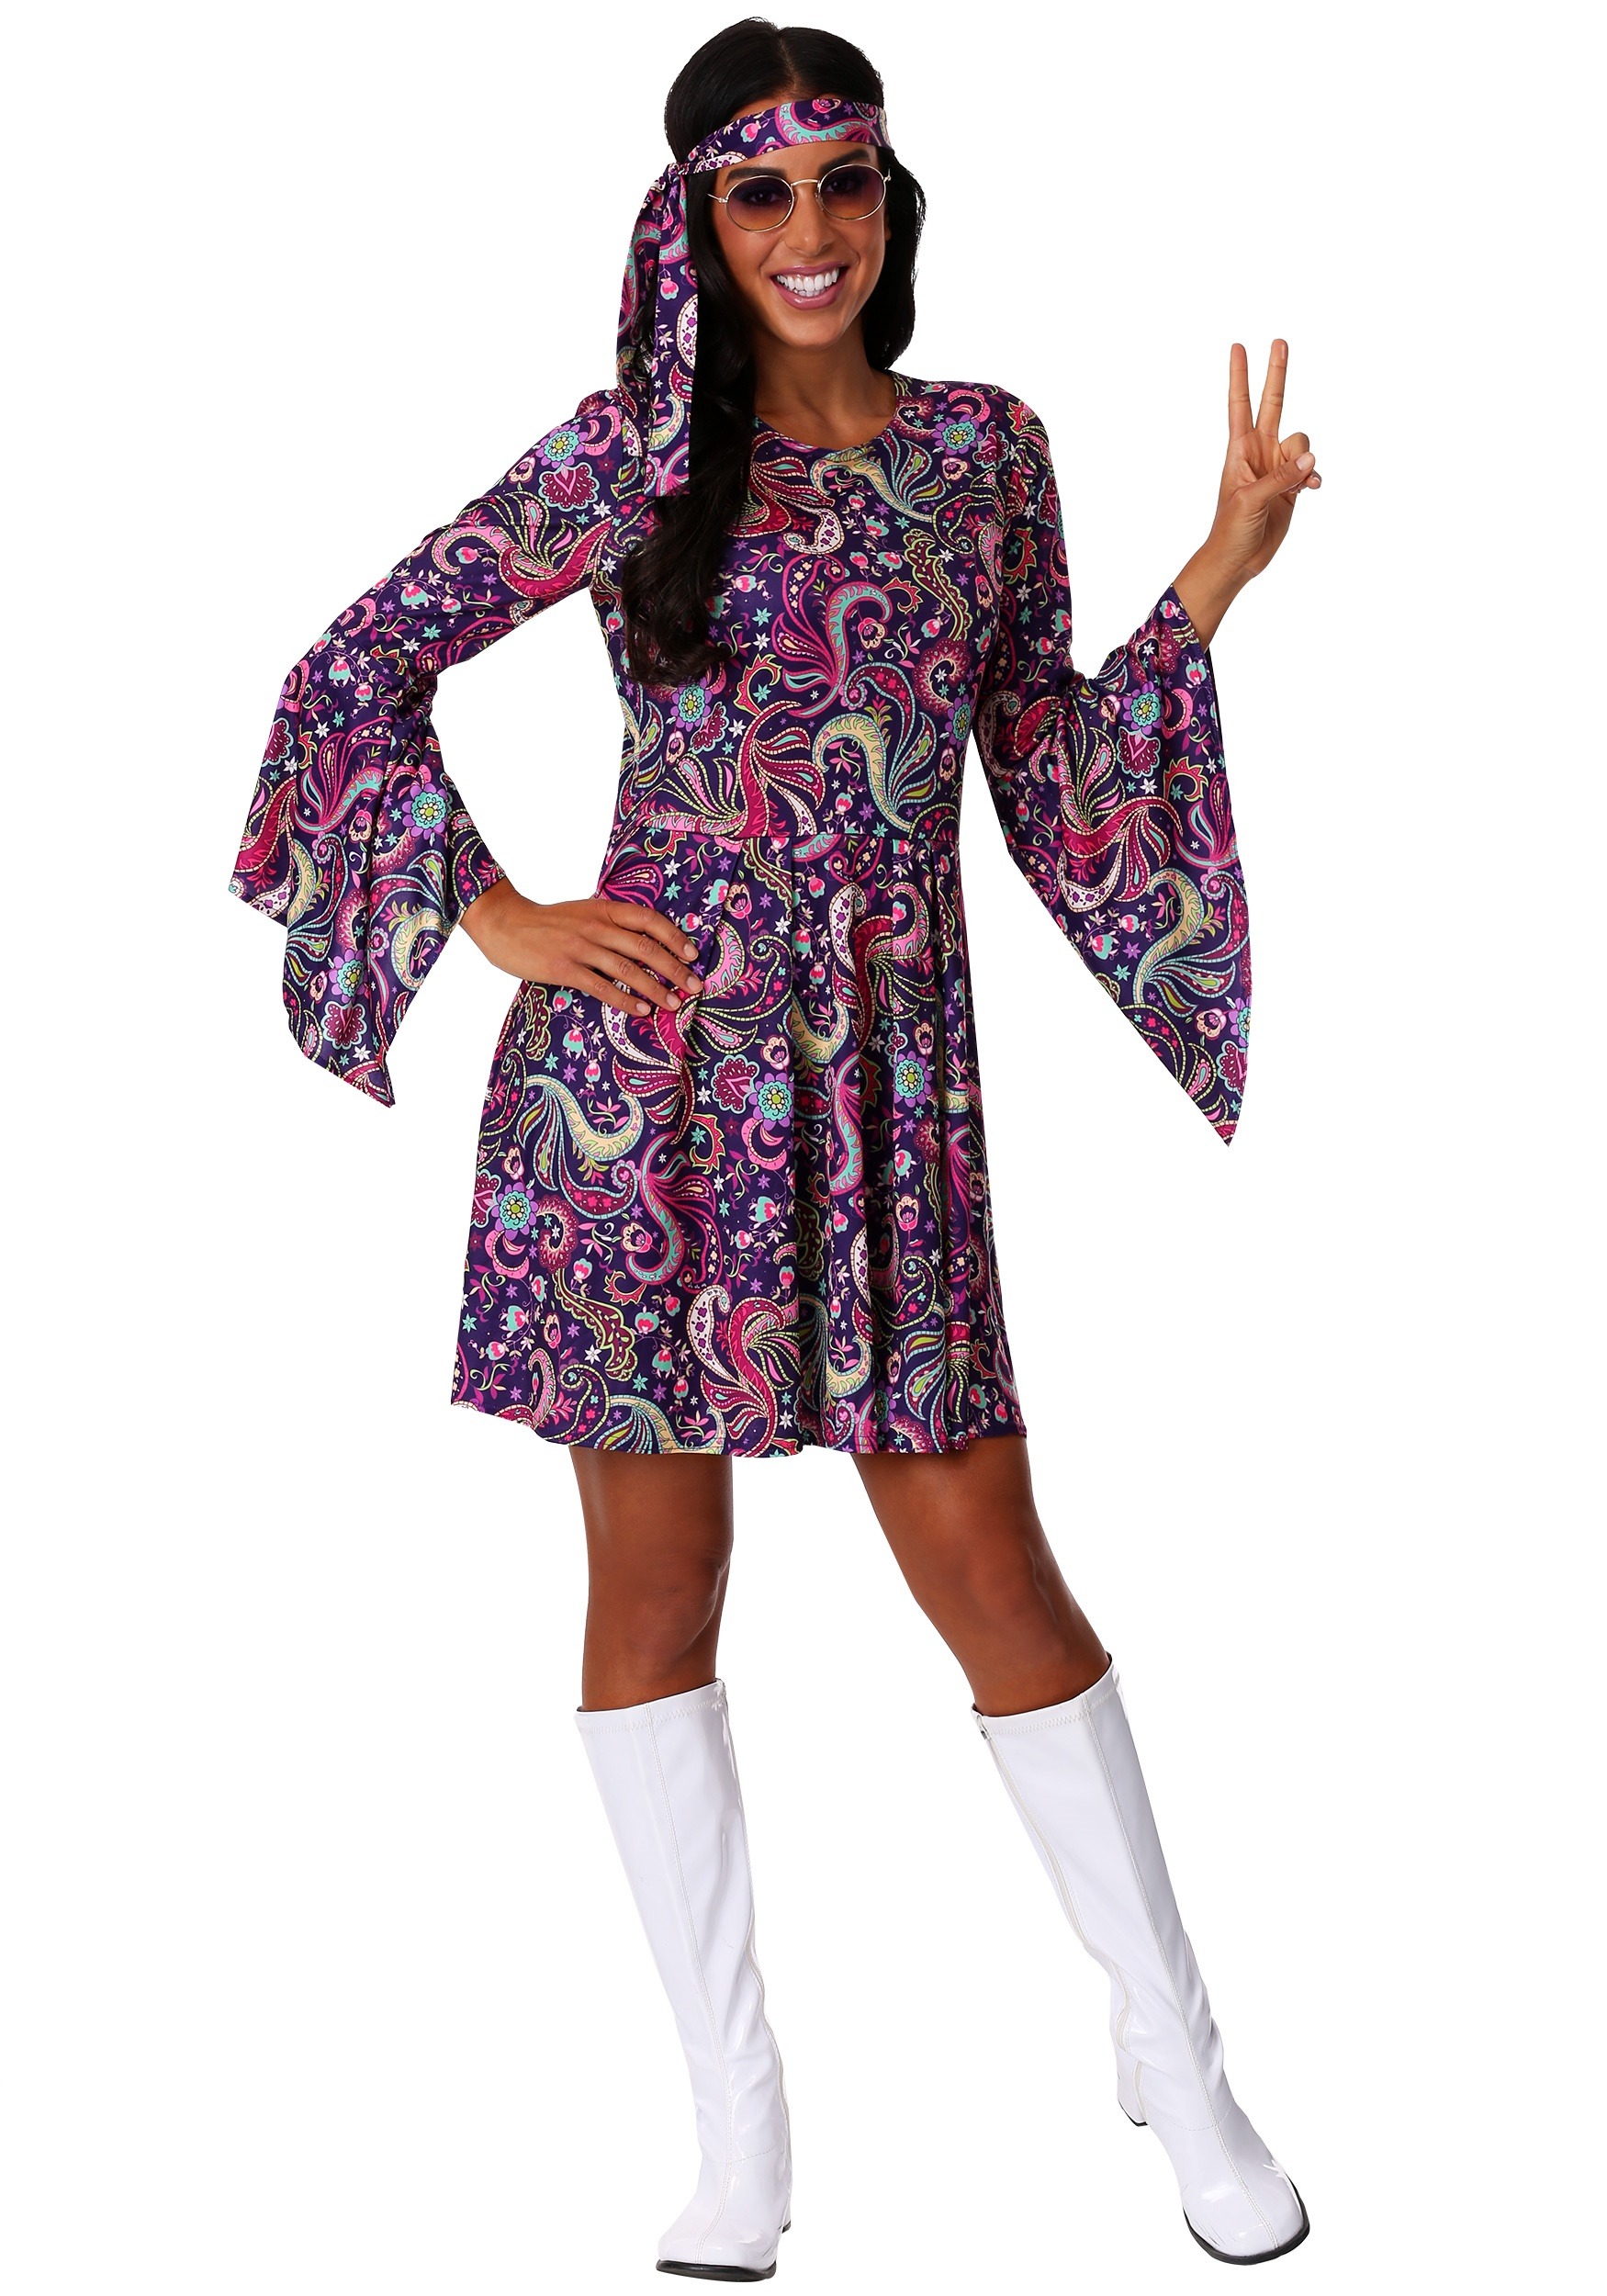 Adult Fuchsia Bodysuit Woman Creative Costume, $48.99